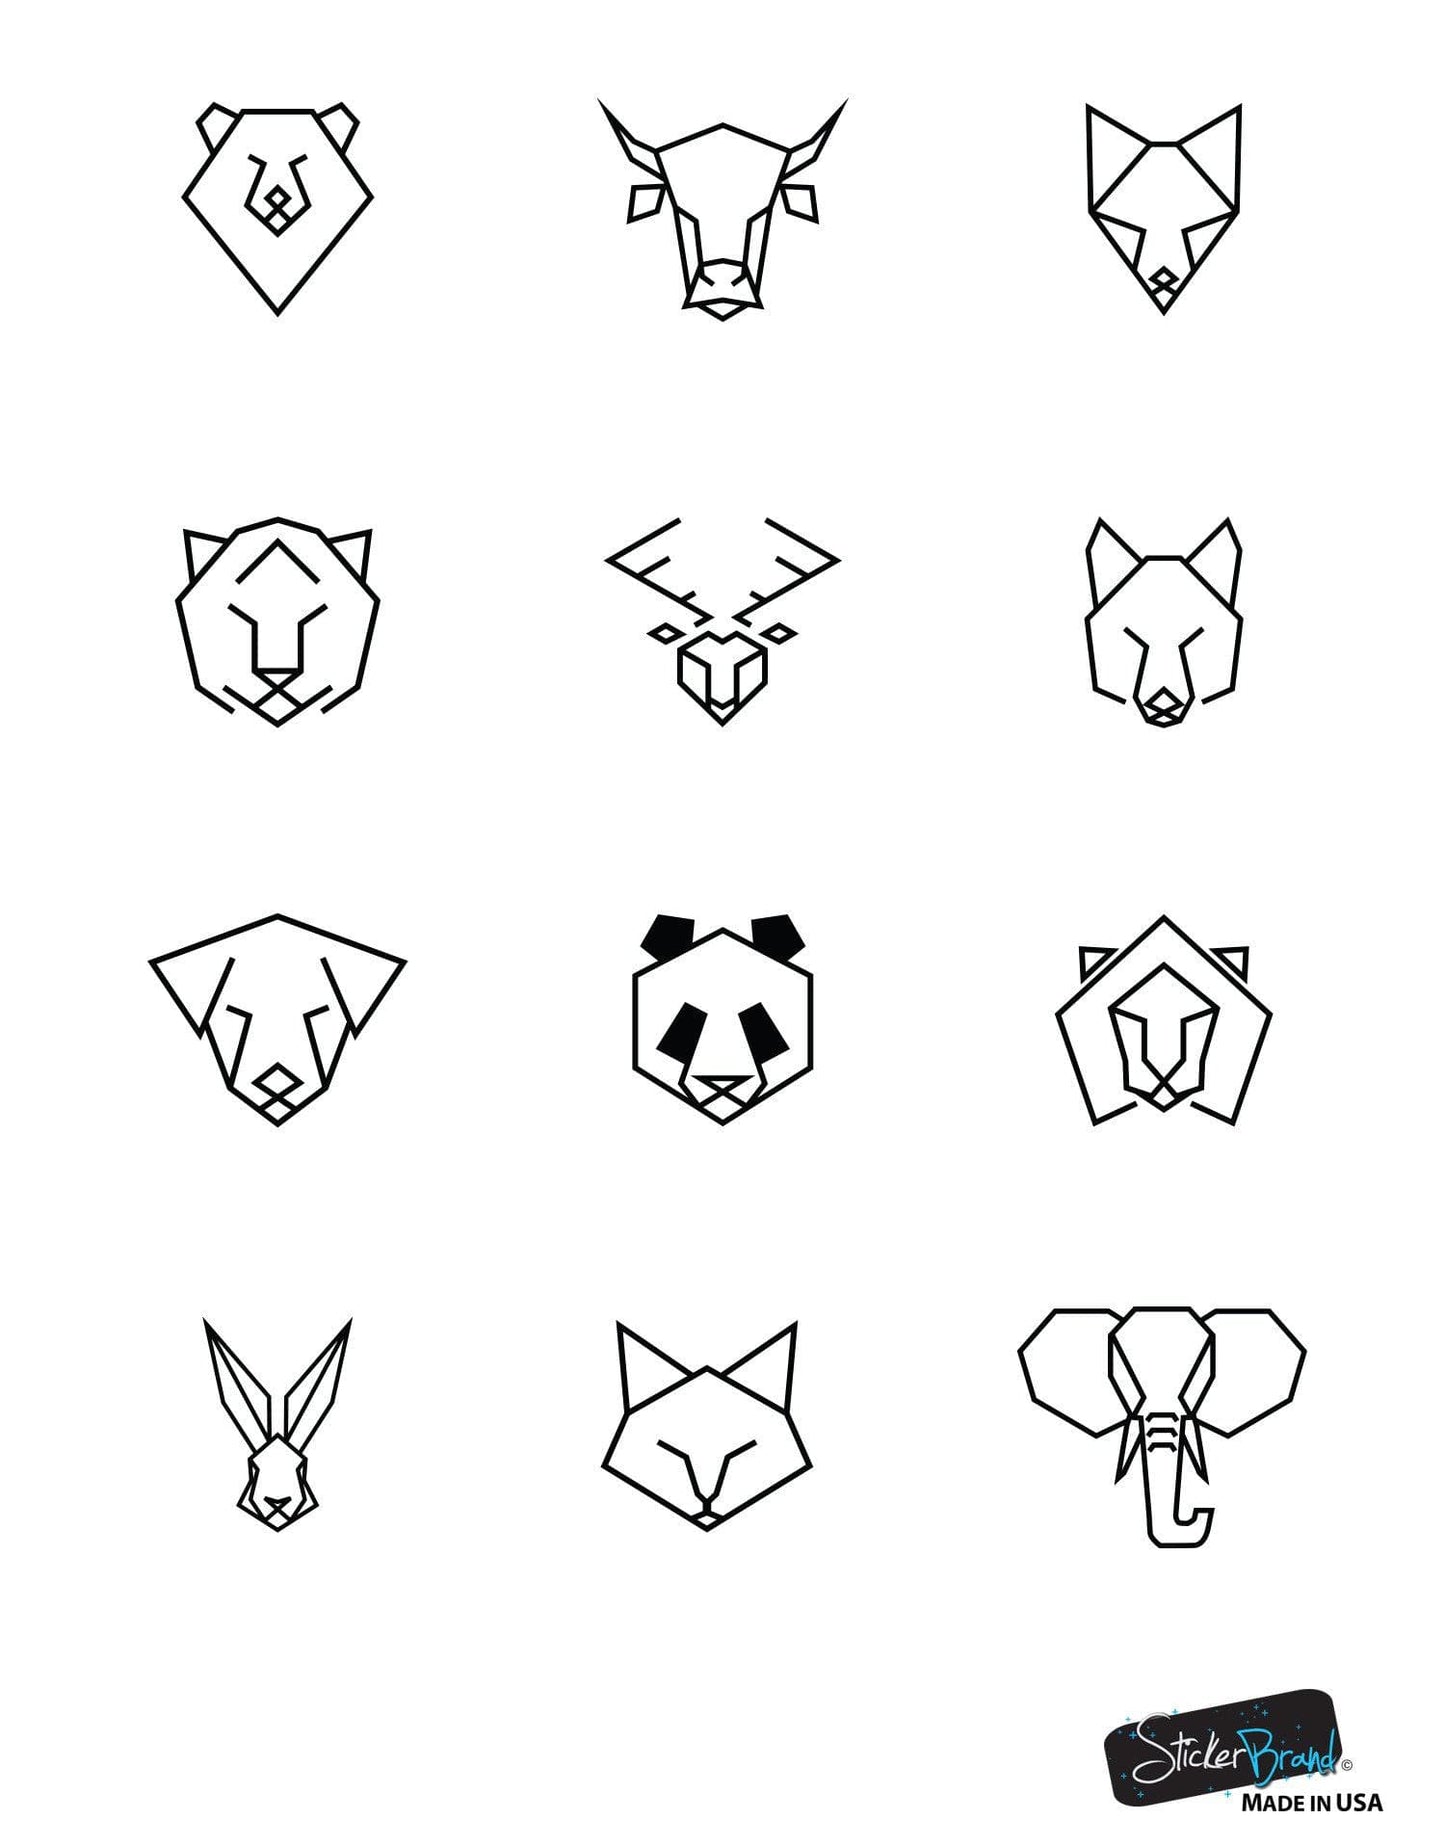 Bear, Bull, Fox, Tiger, Deer, Wolf, Dog, Panda, Lion, Rabbit, Cat and Elephant Geometric Animal Pattern Wall Decal #6091